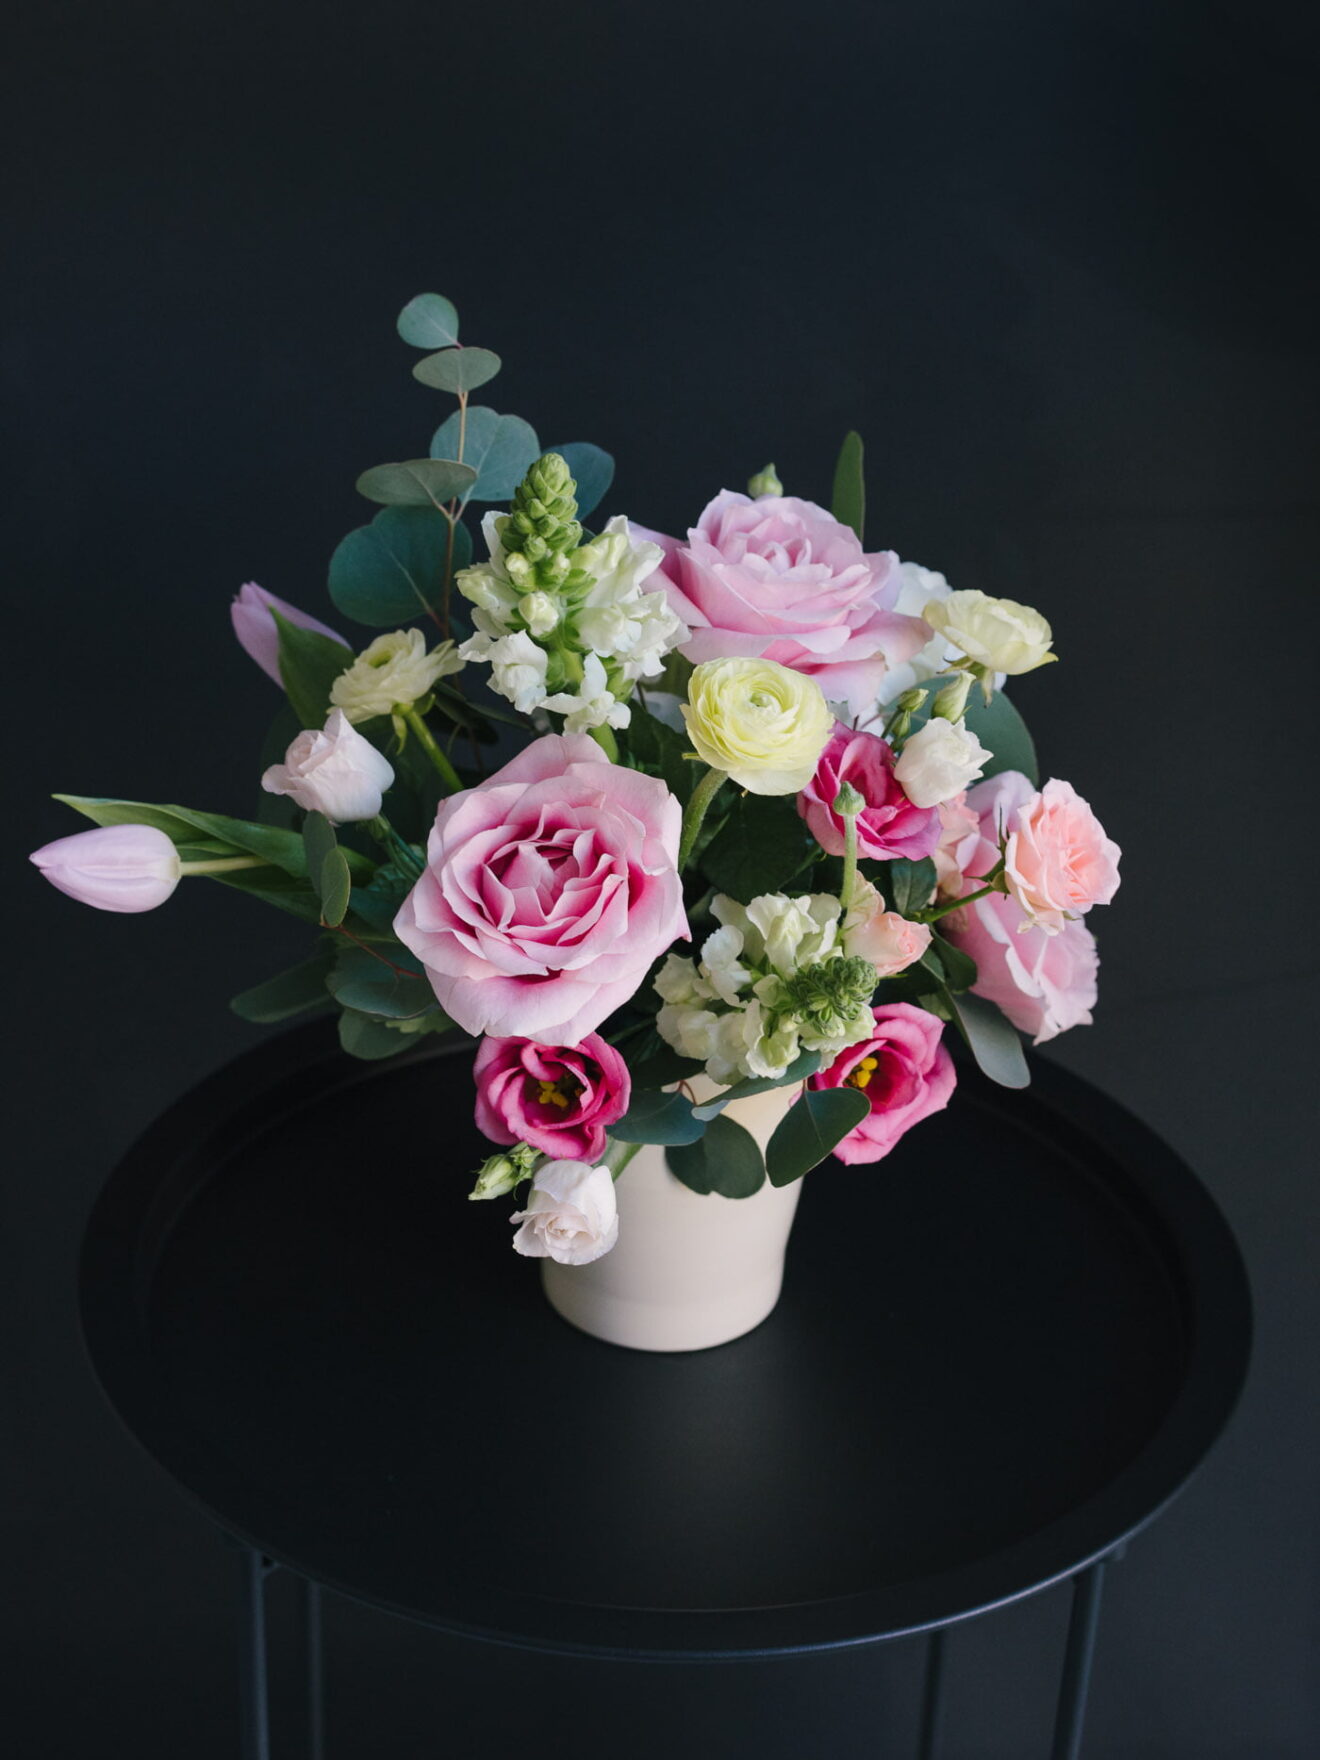 Aranjament Floral Pastelat În Vas Ceramic